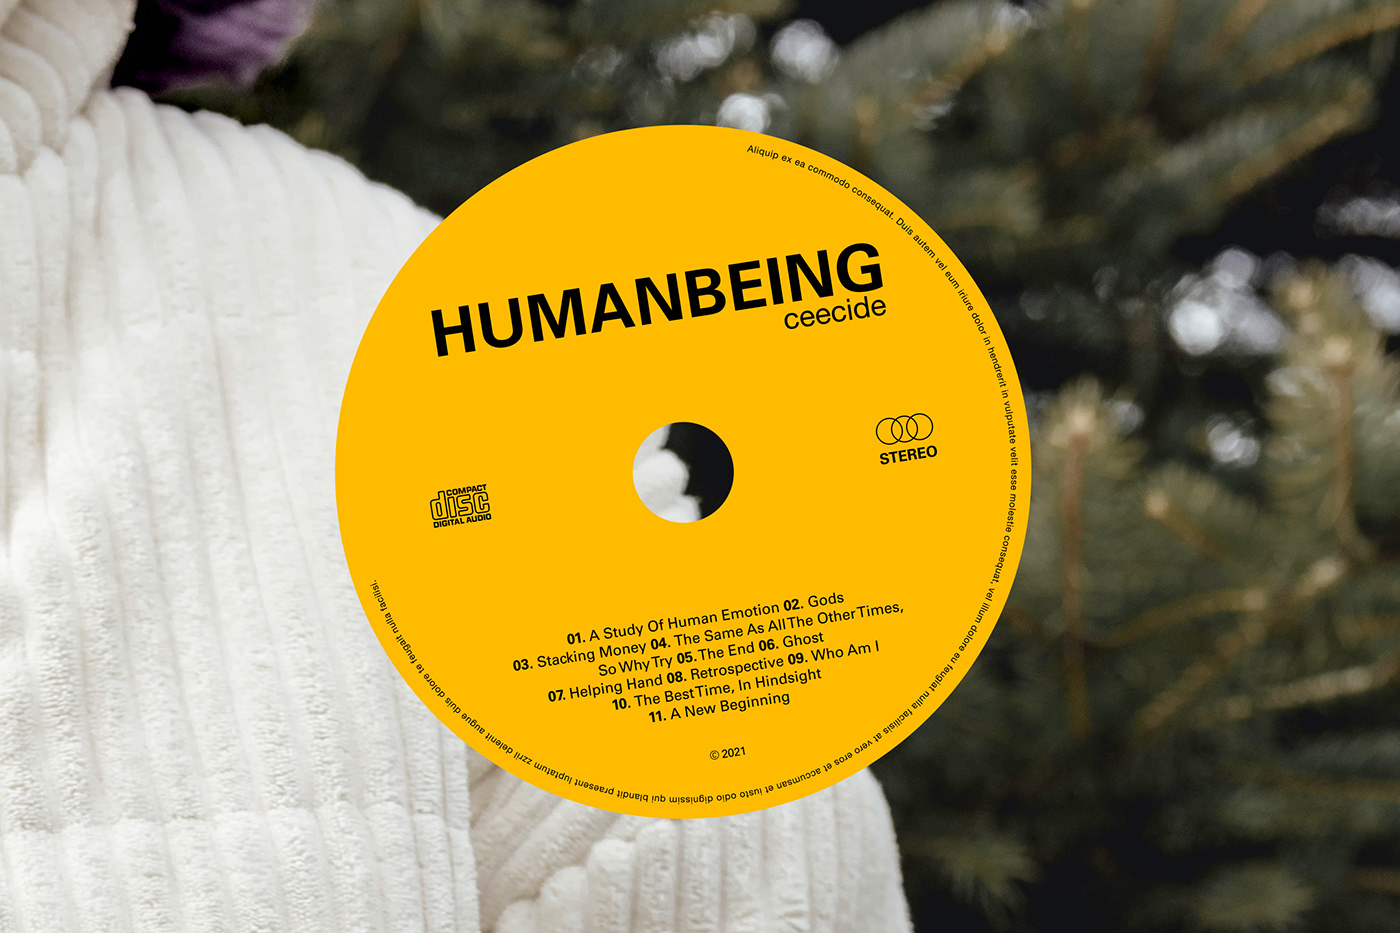 artwork cd ceecide Cover Art humanbeing iaoeu music